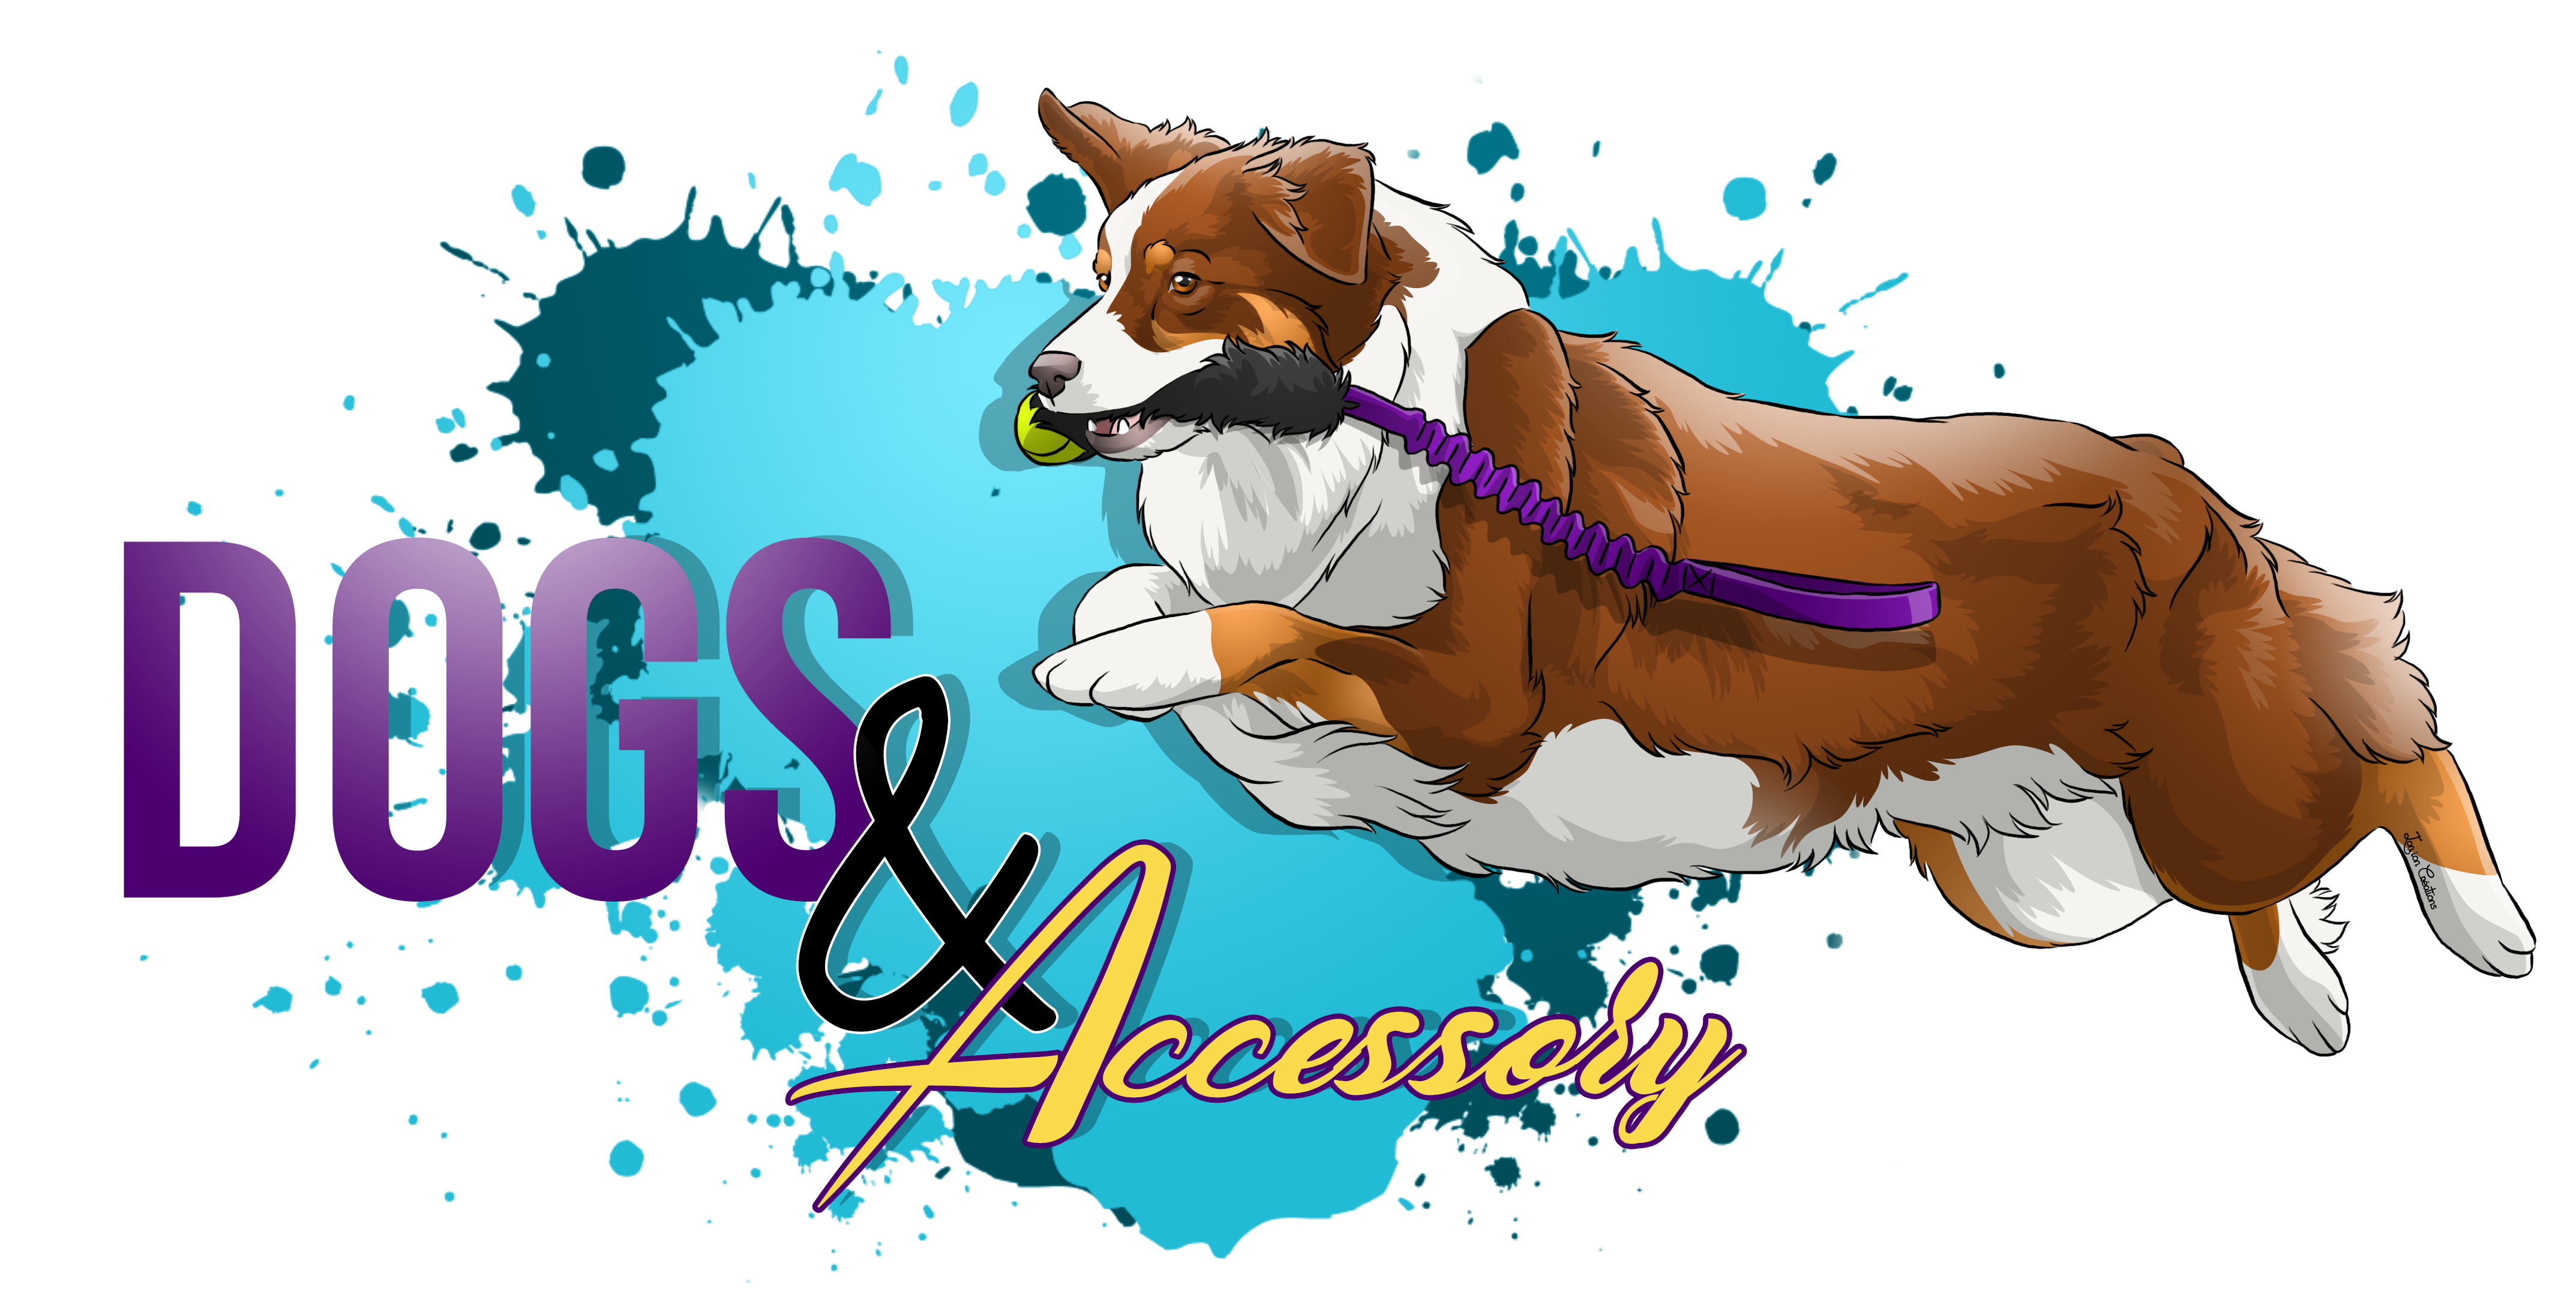 Dogs Accessory